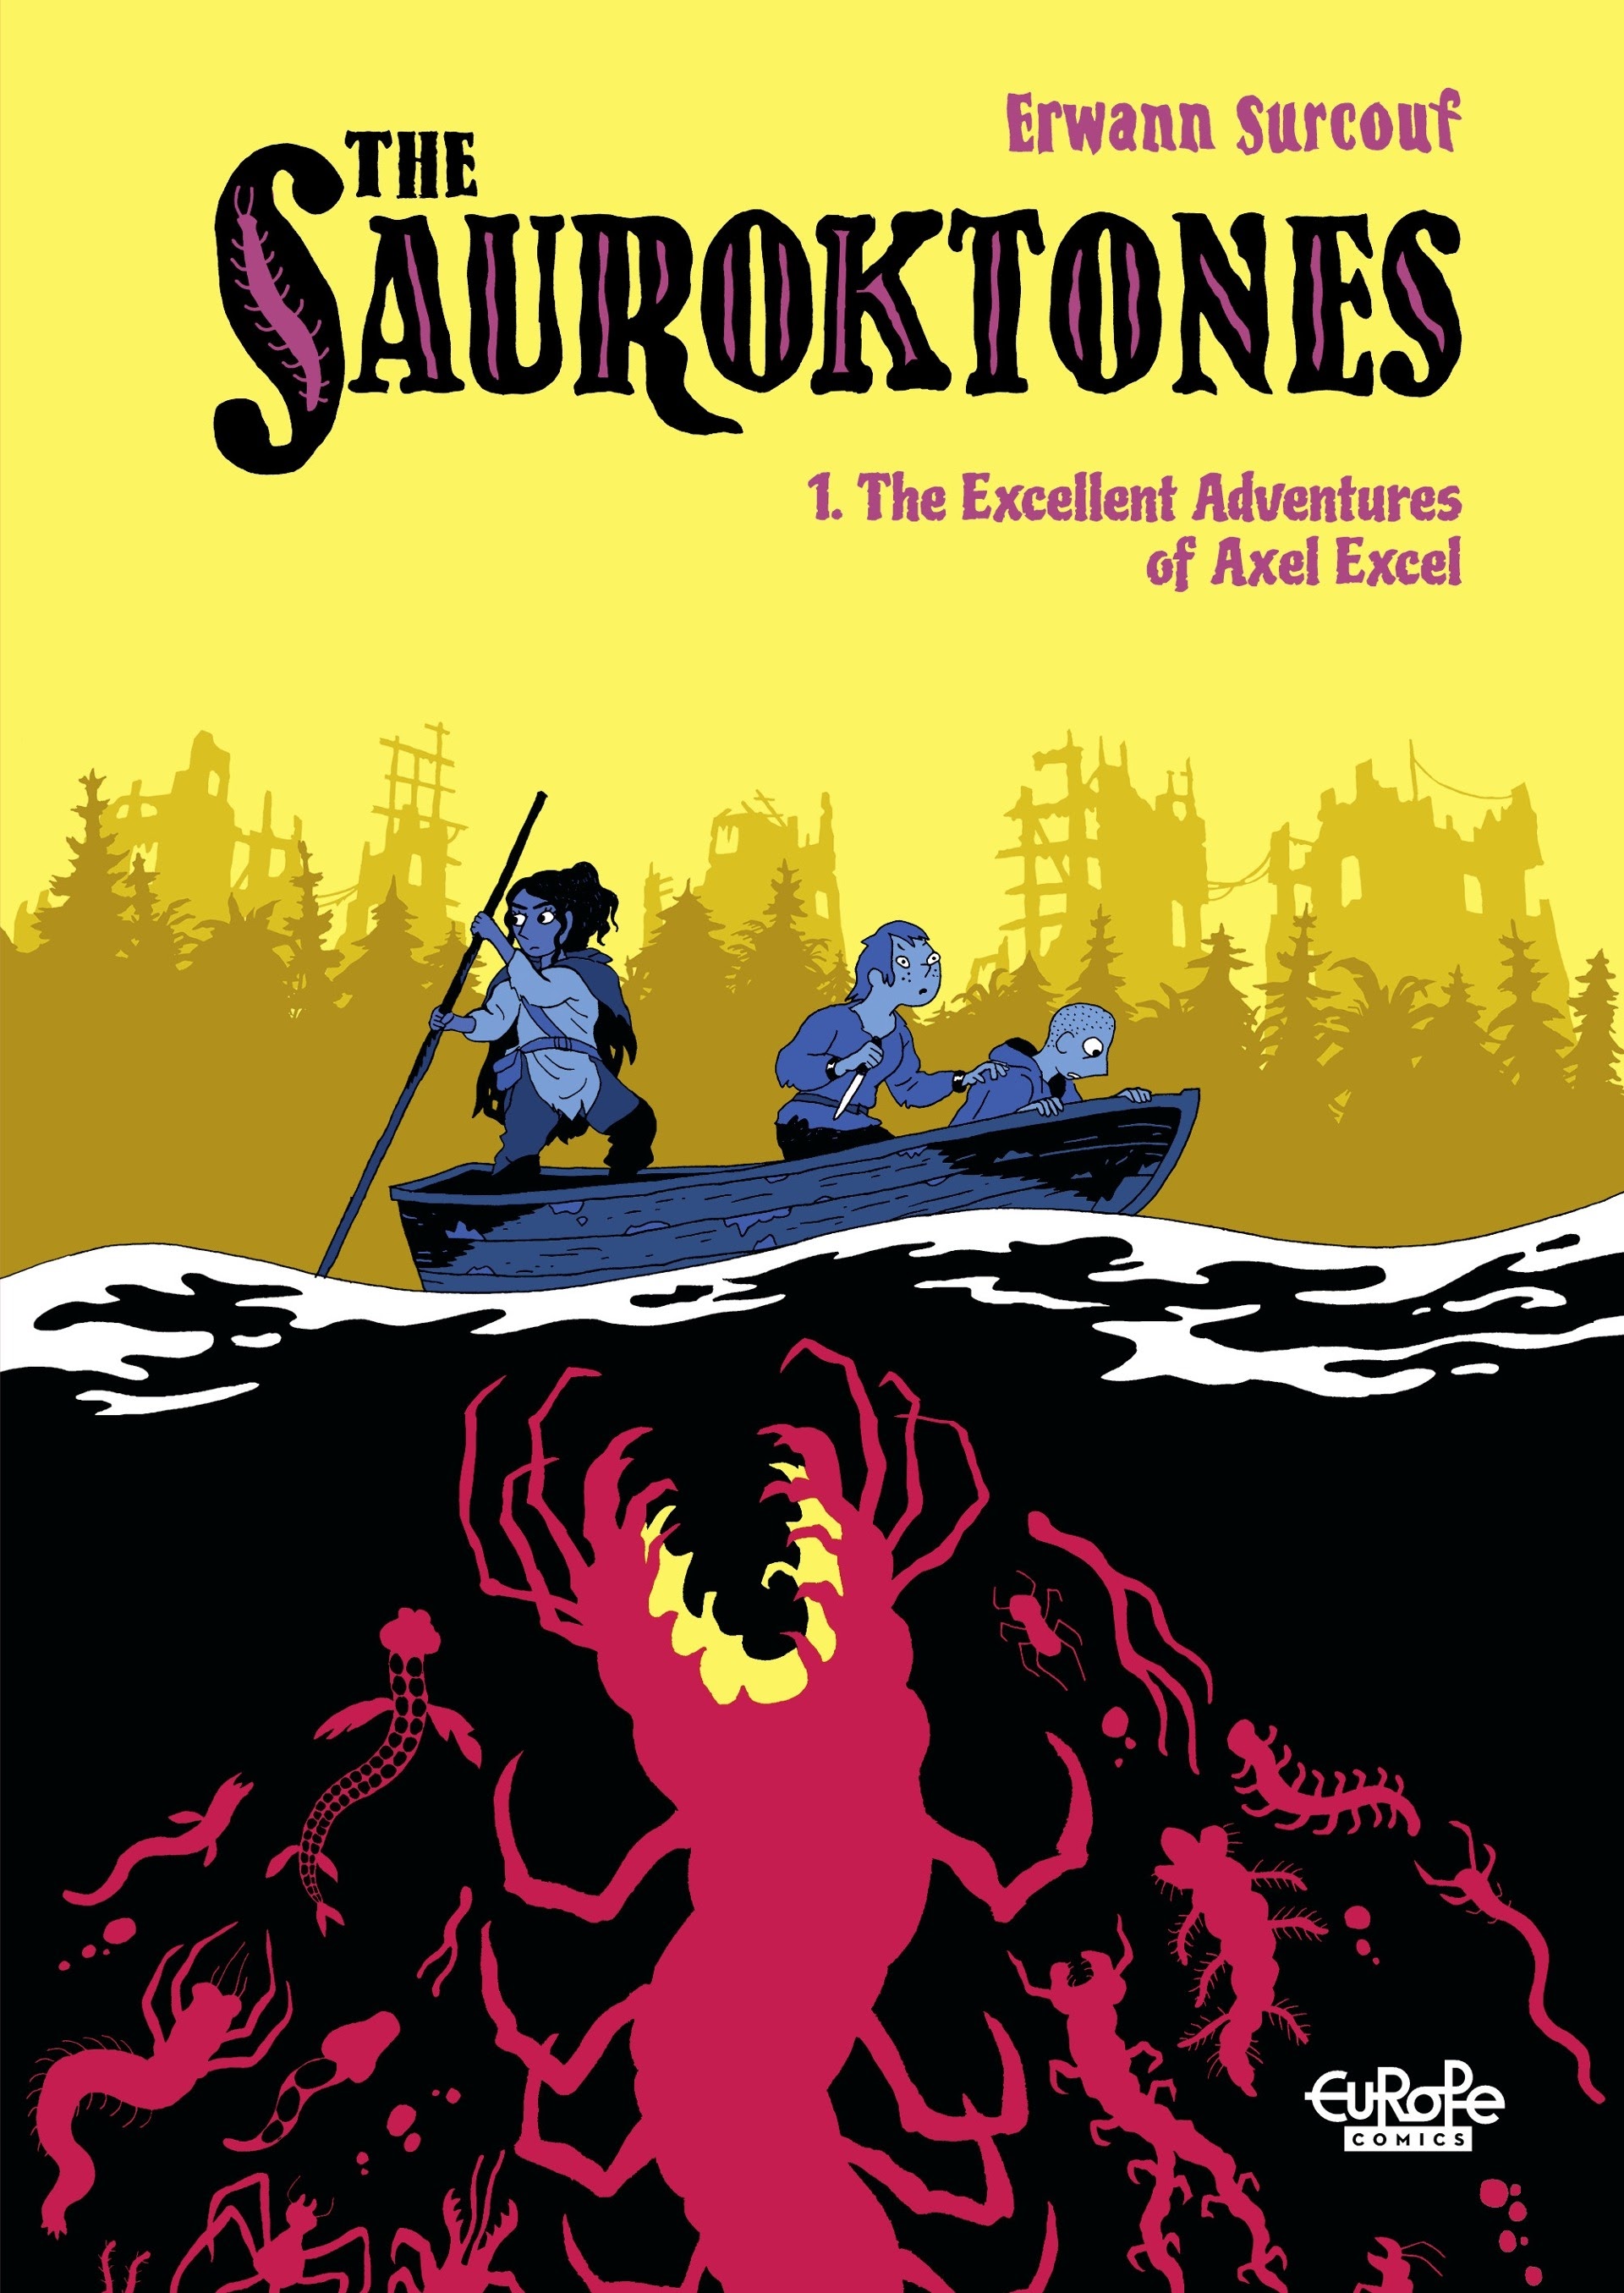 Read online The Sauroktones comic -  Issue #1 - 1